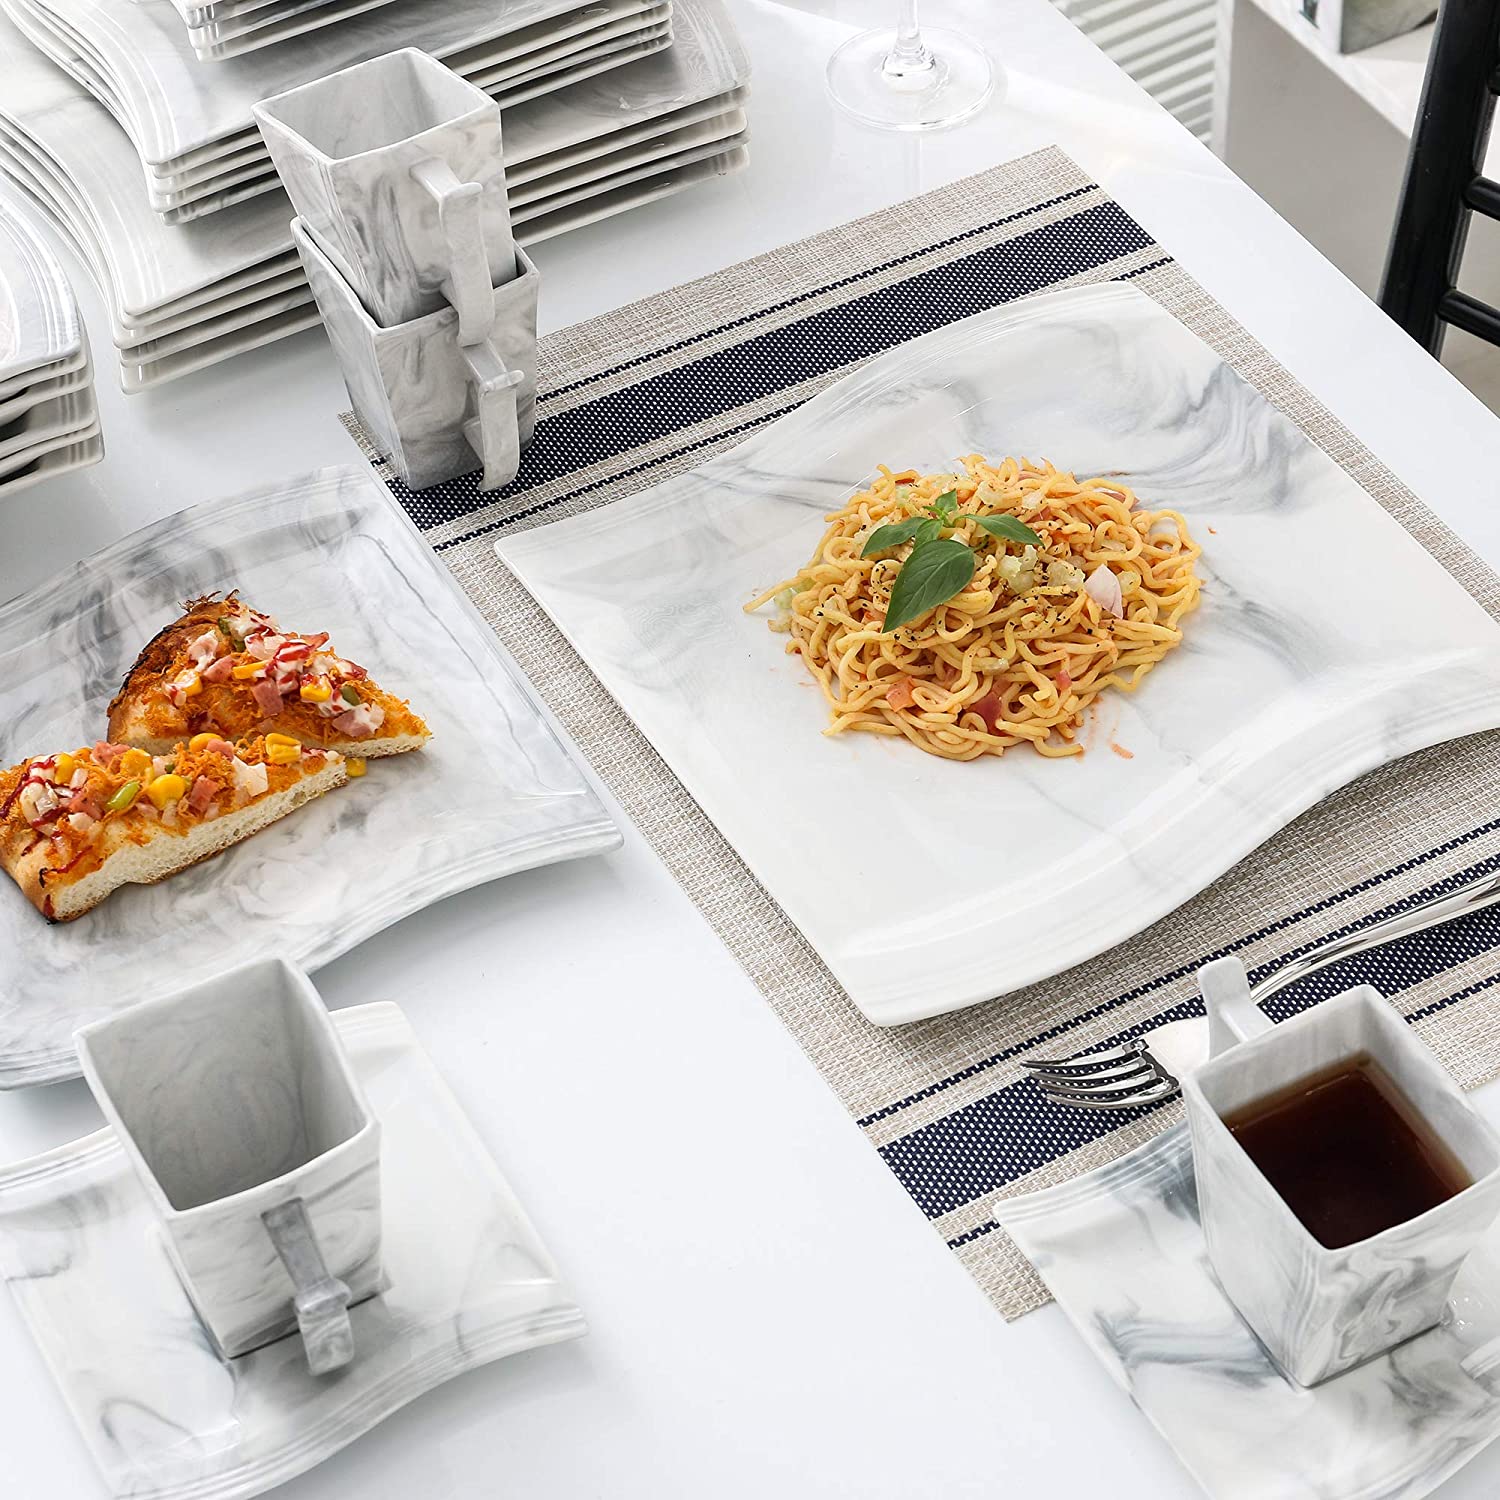 30-Piece Luxury Dinnerware Set – slyinspireme